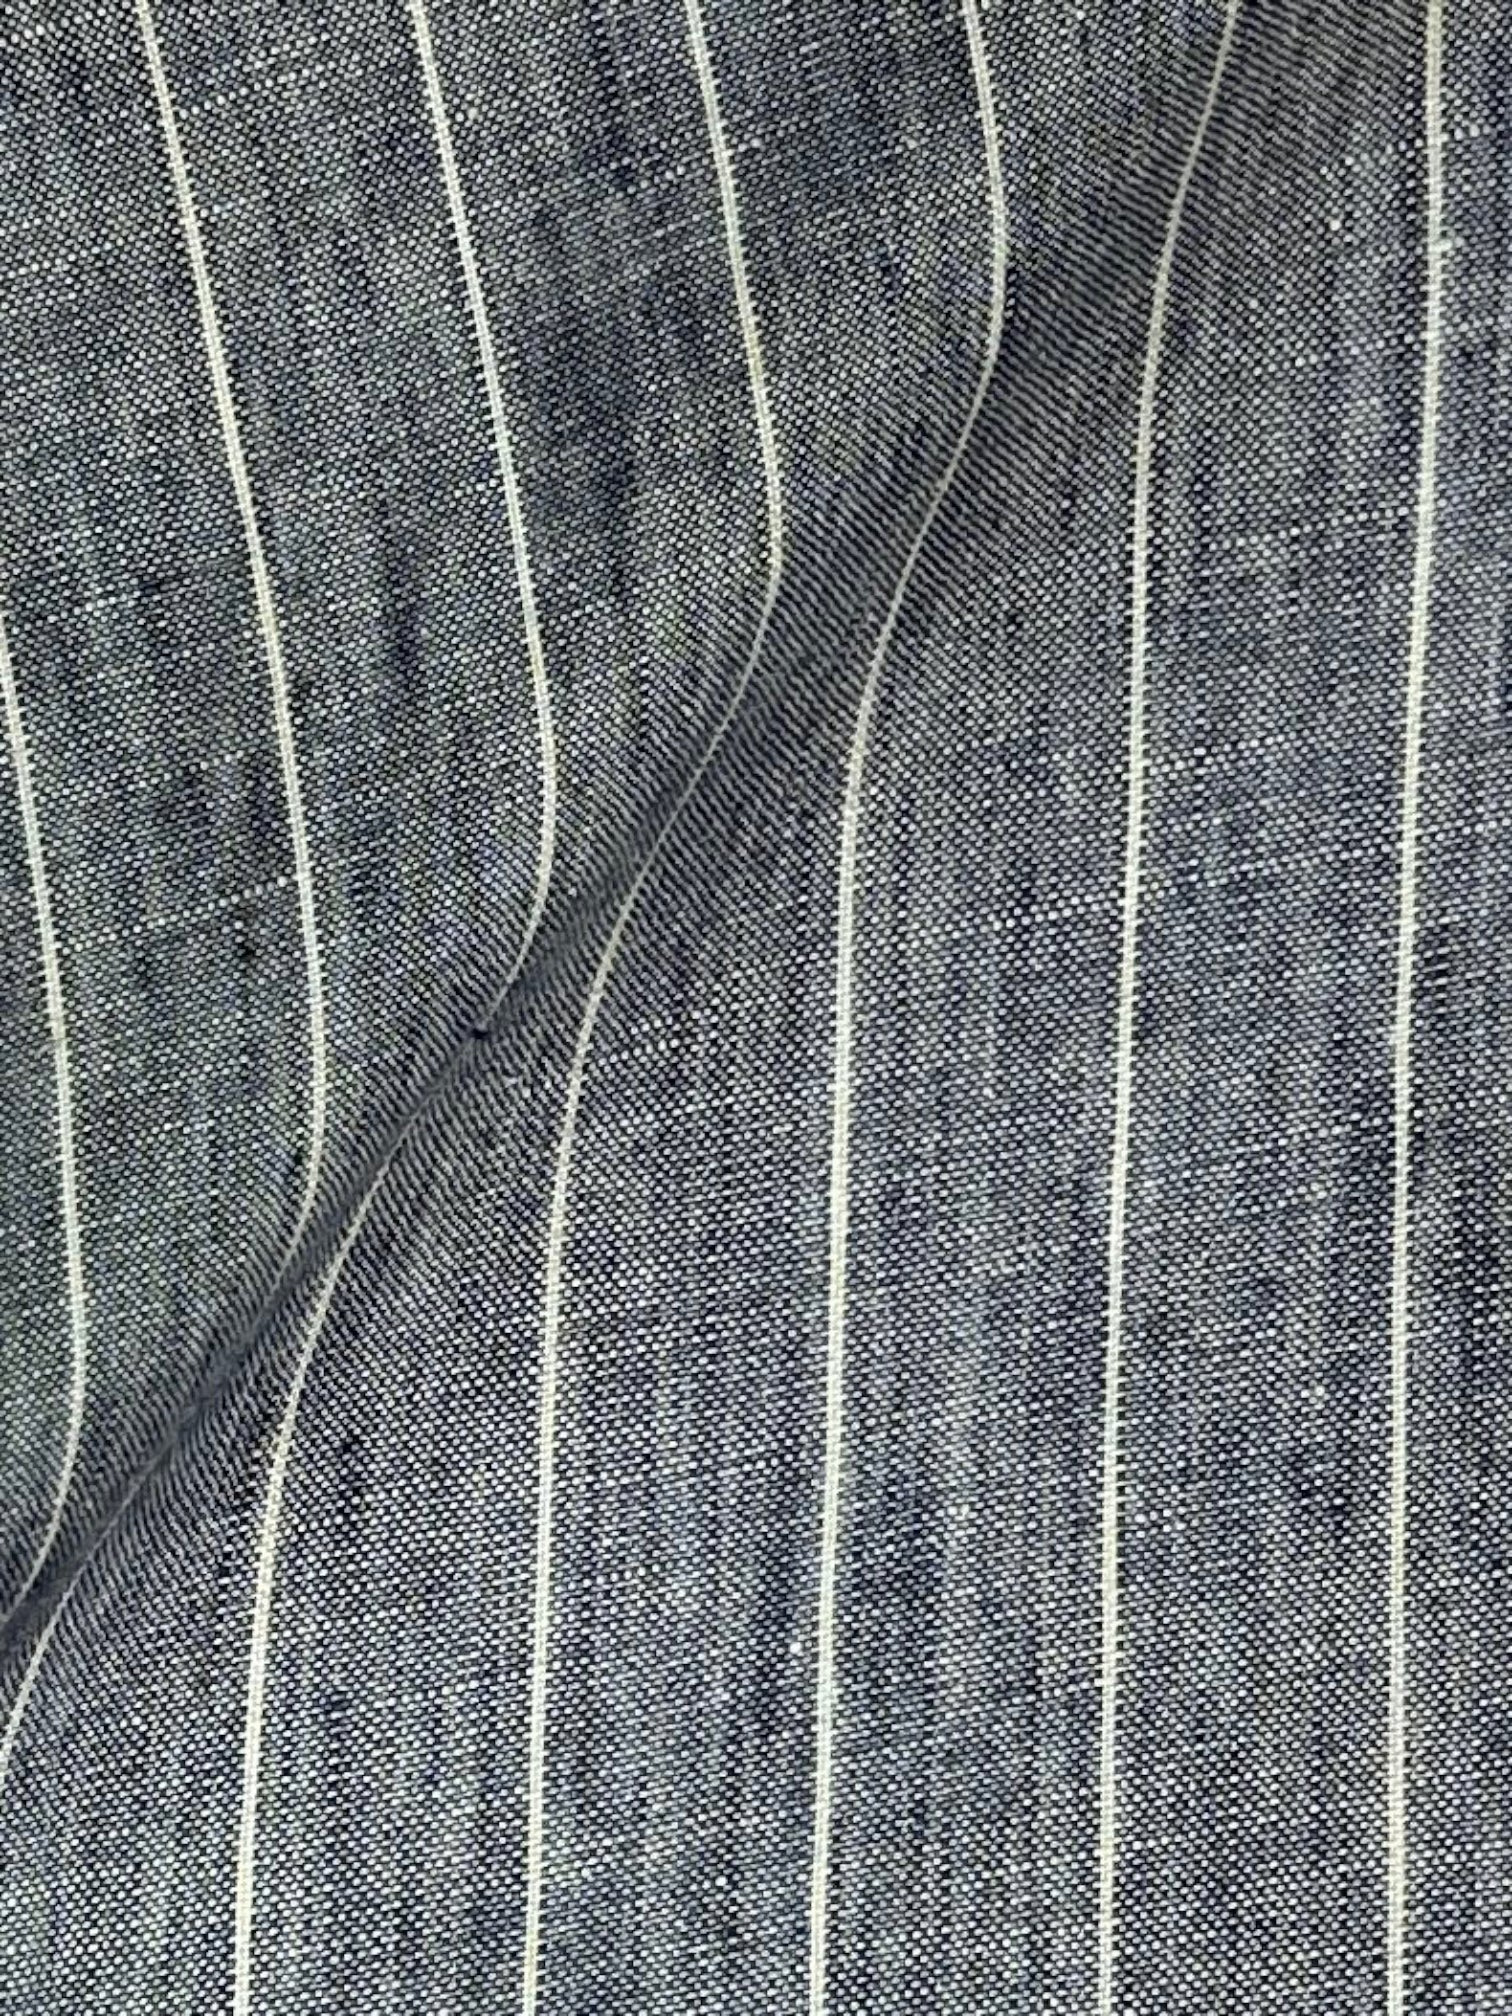 Corneliani Denim Blue Linen Pinstripe Jacket